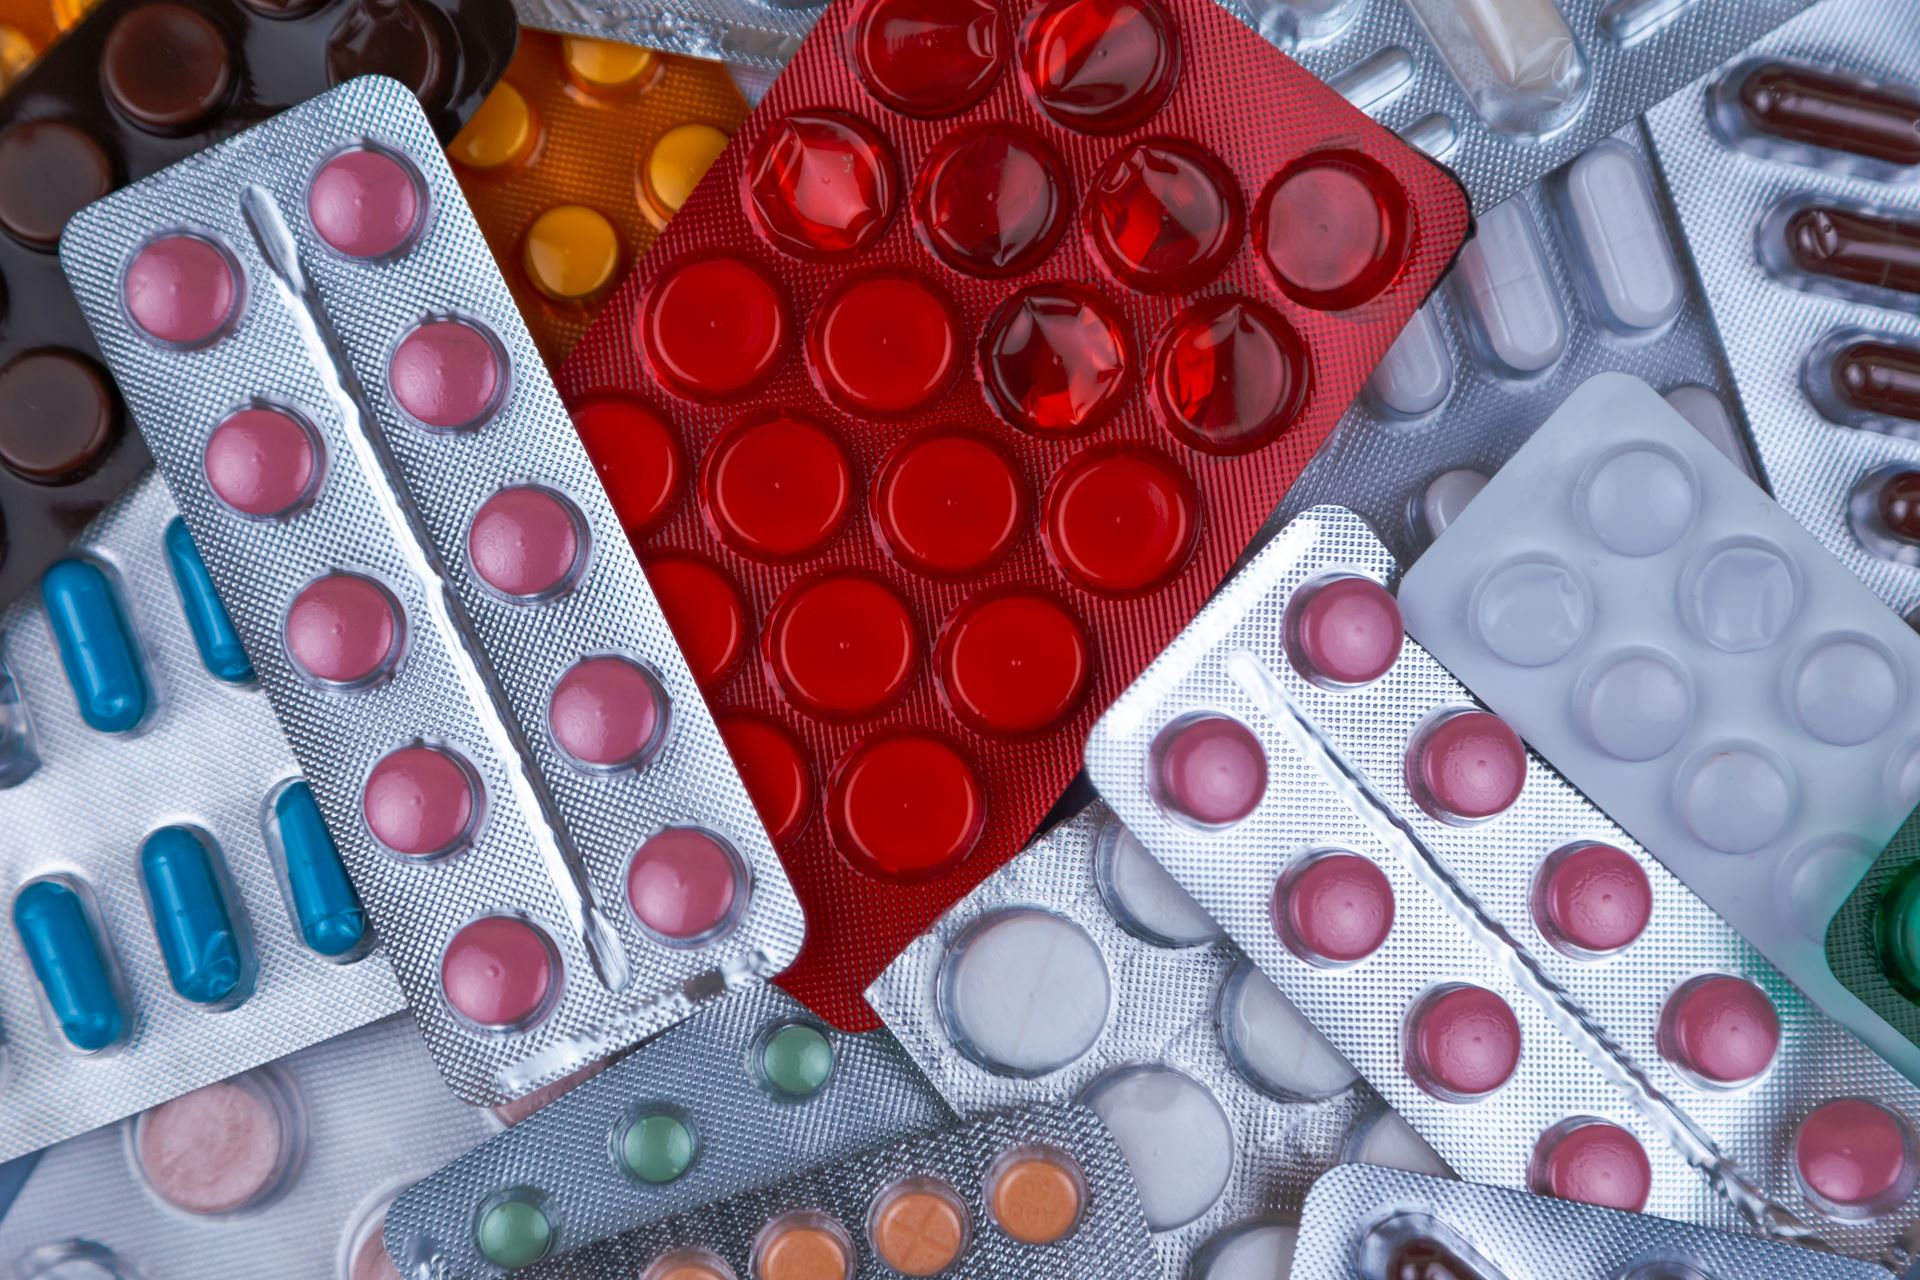 image of blister packs of medication